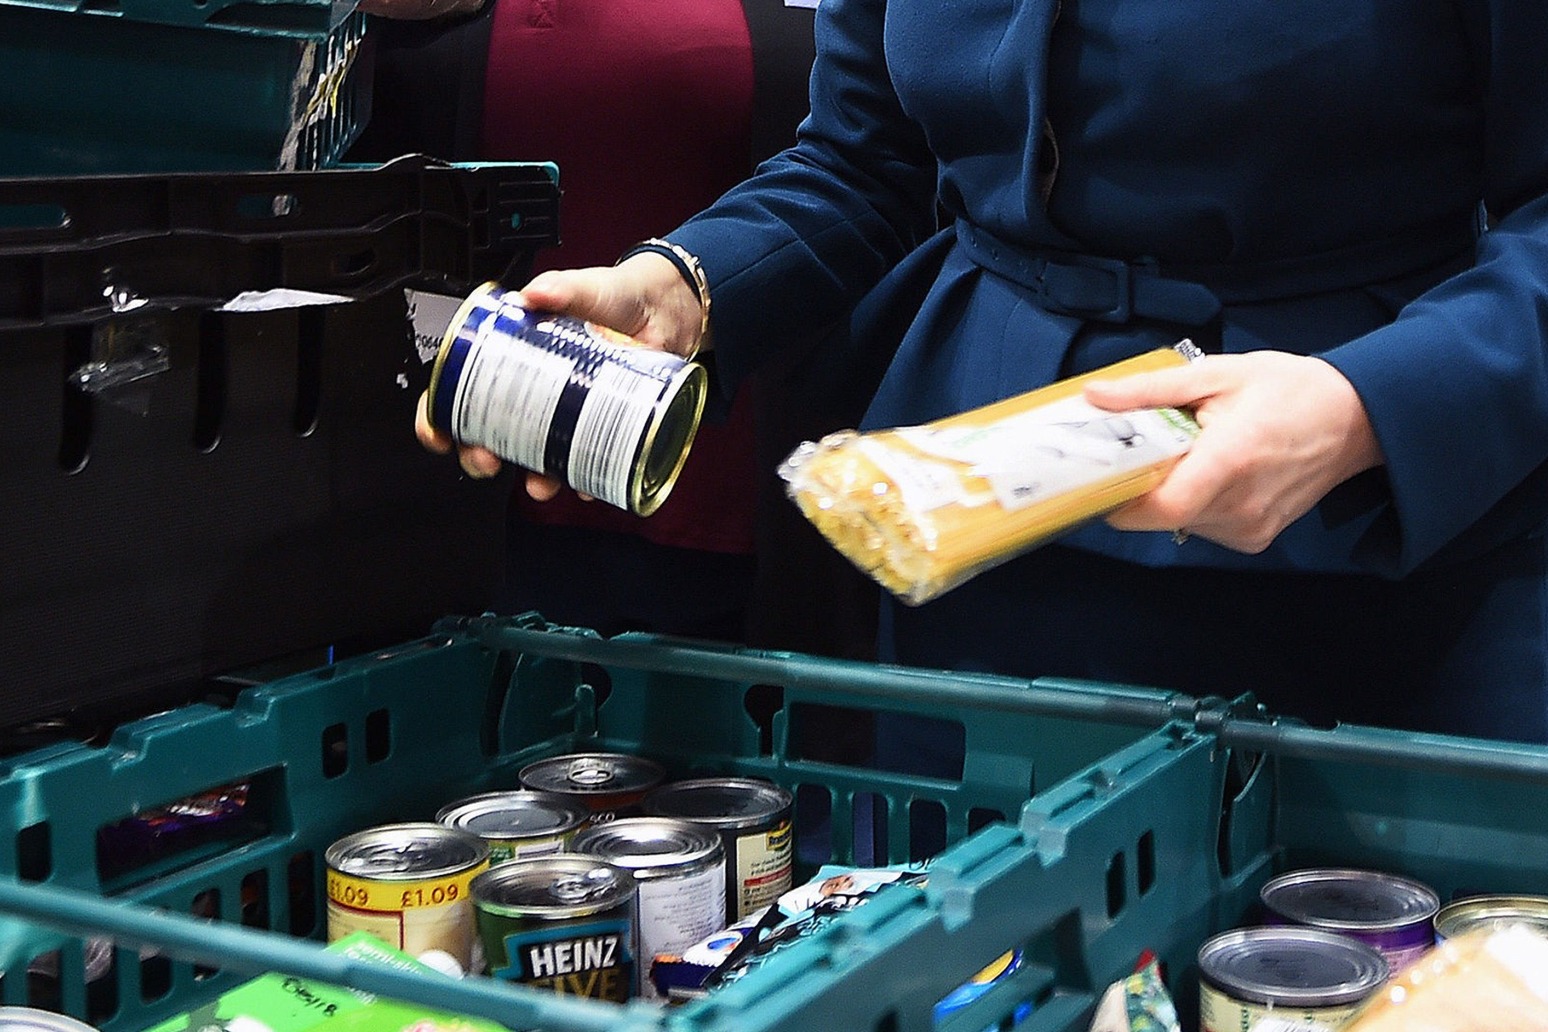 Huge increase in food bank use in recent weeks, charities report 